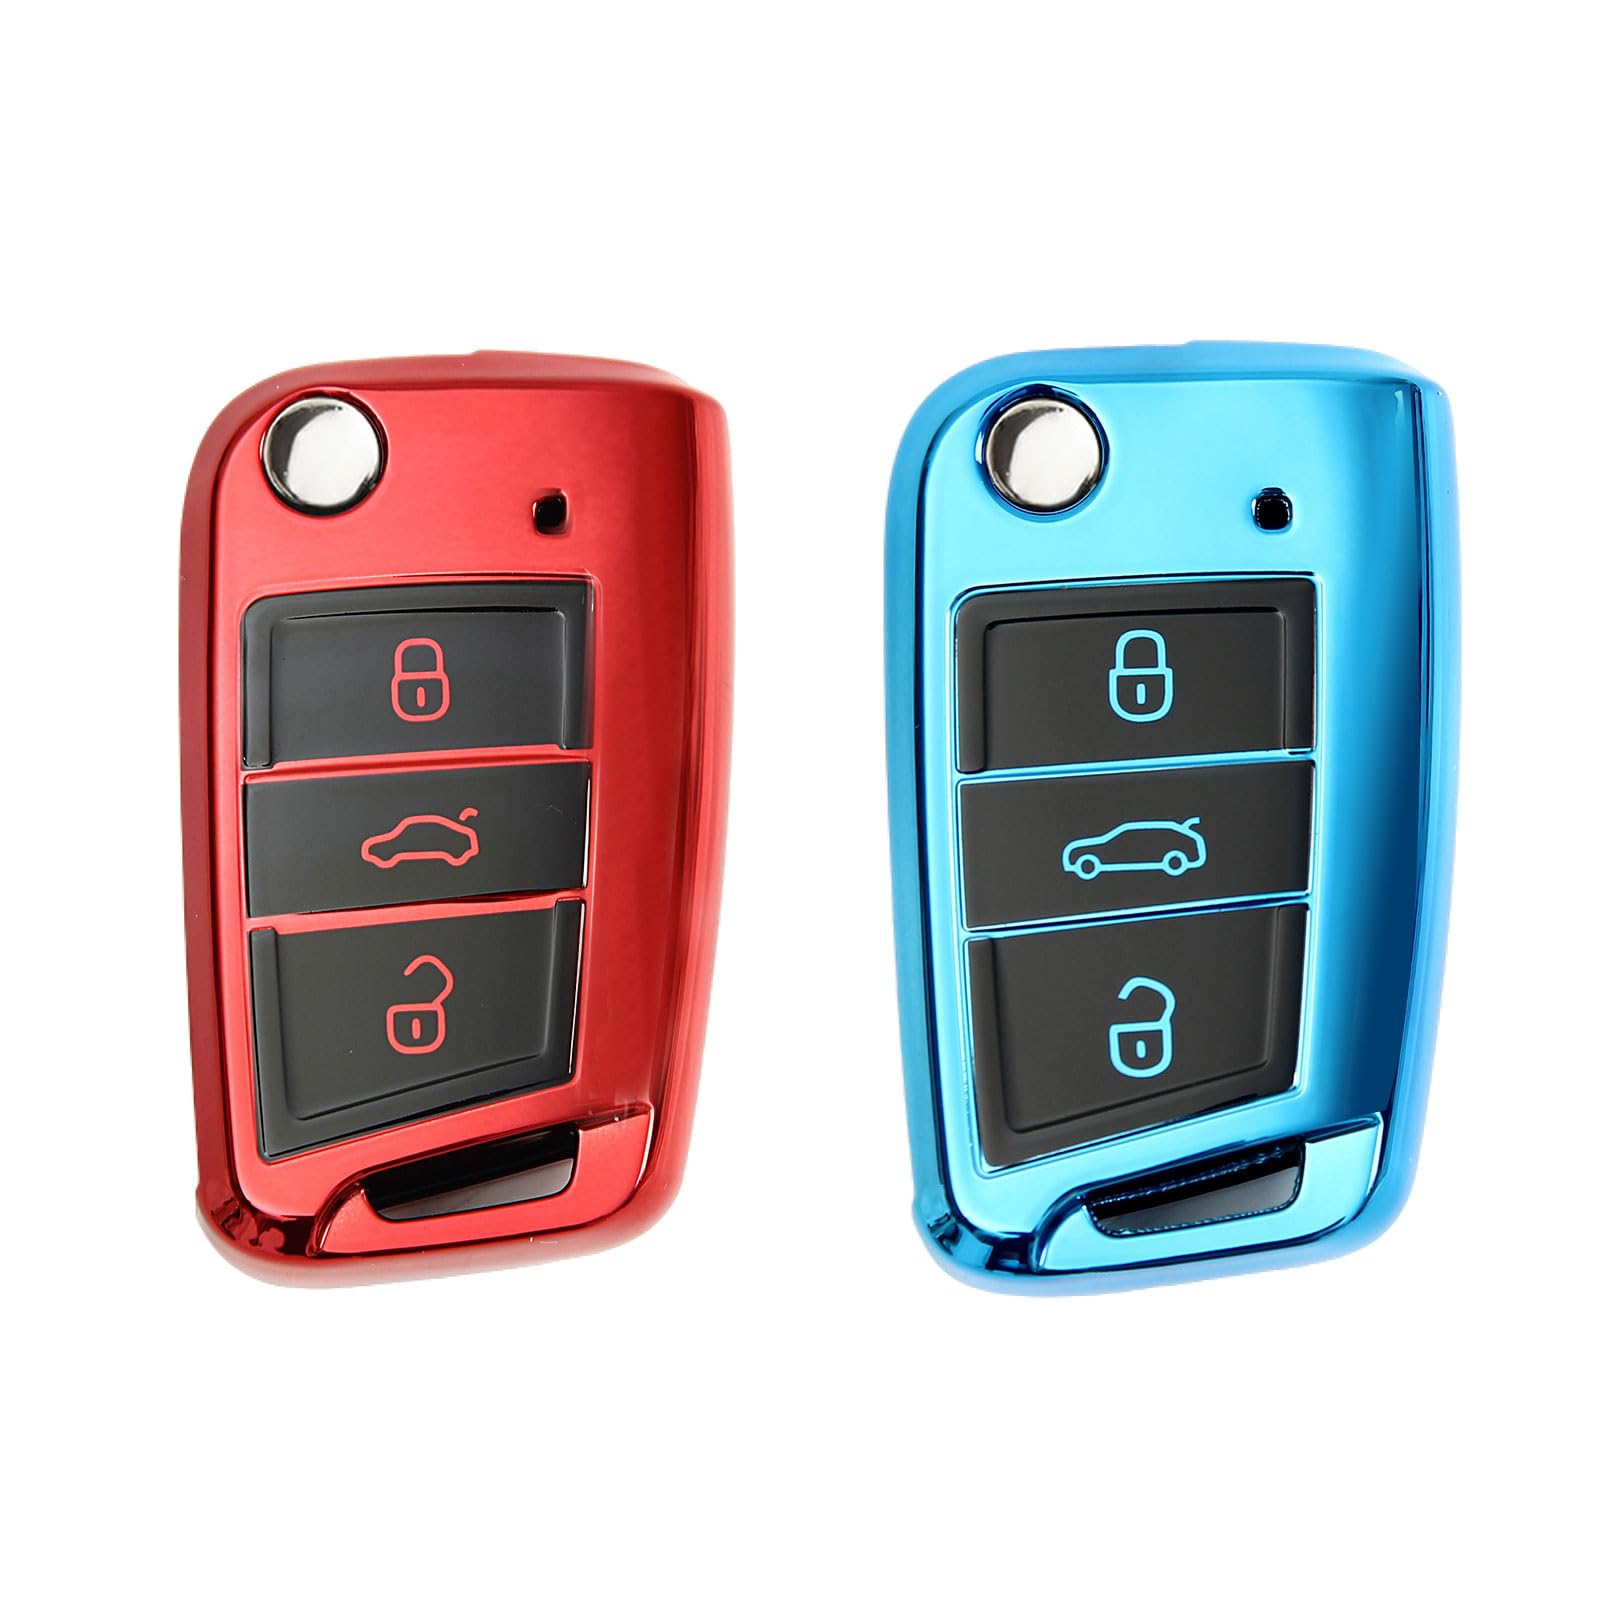 2 Stück Autoschlüssel Hülle, Schlüsselbox,Autoschlüssel Schutzhülle kompatibel mit VW Golf 7、Polo、Tiguan、Skoda 3-Tasten Schlüsselhülle (Rot + Blau) von Mythosurge